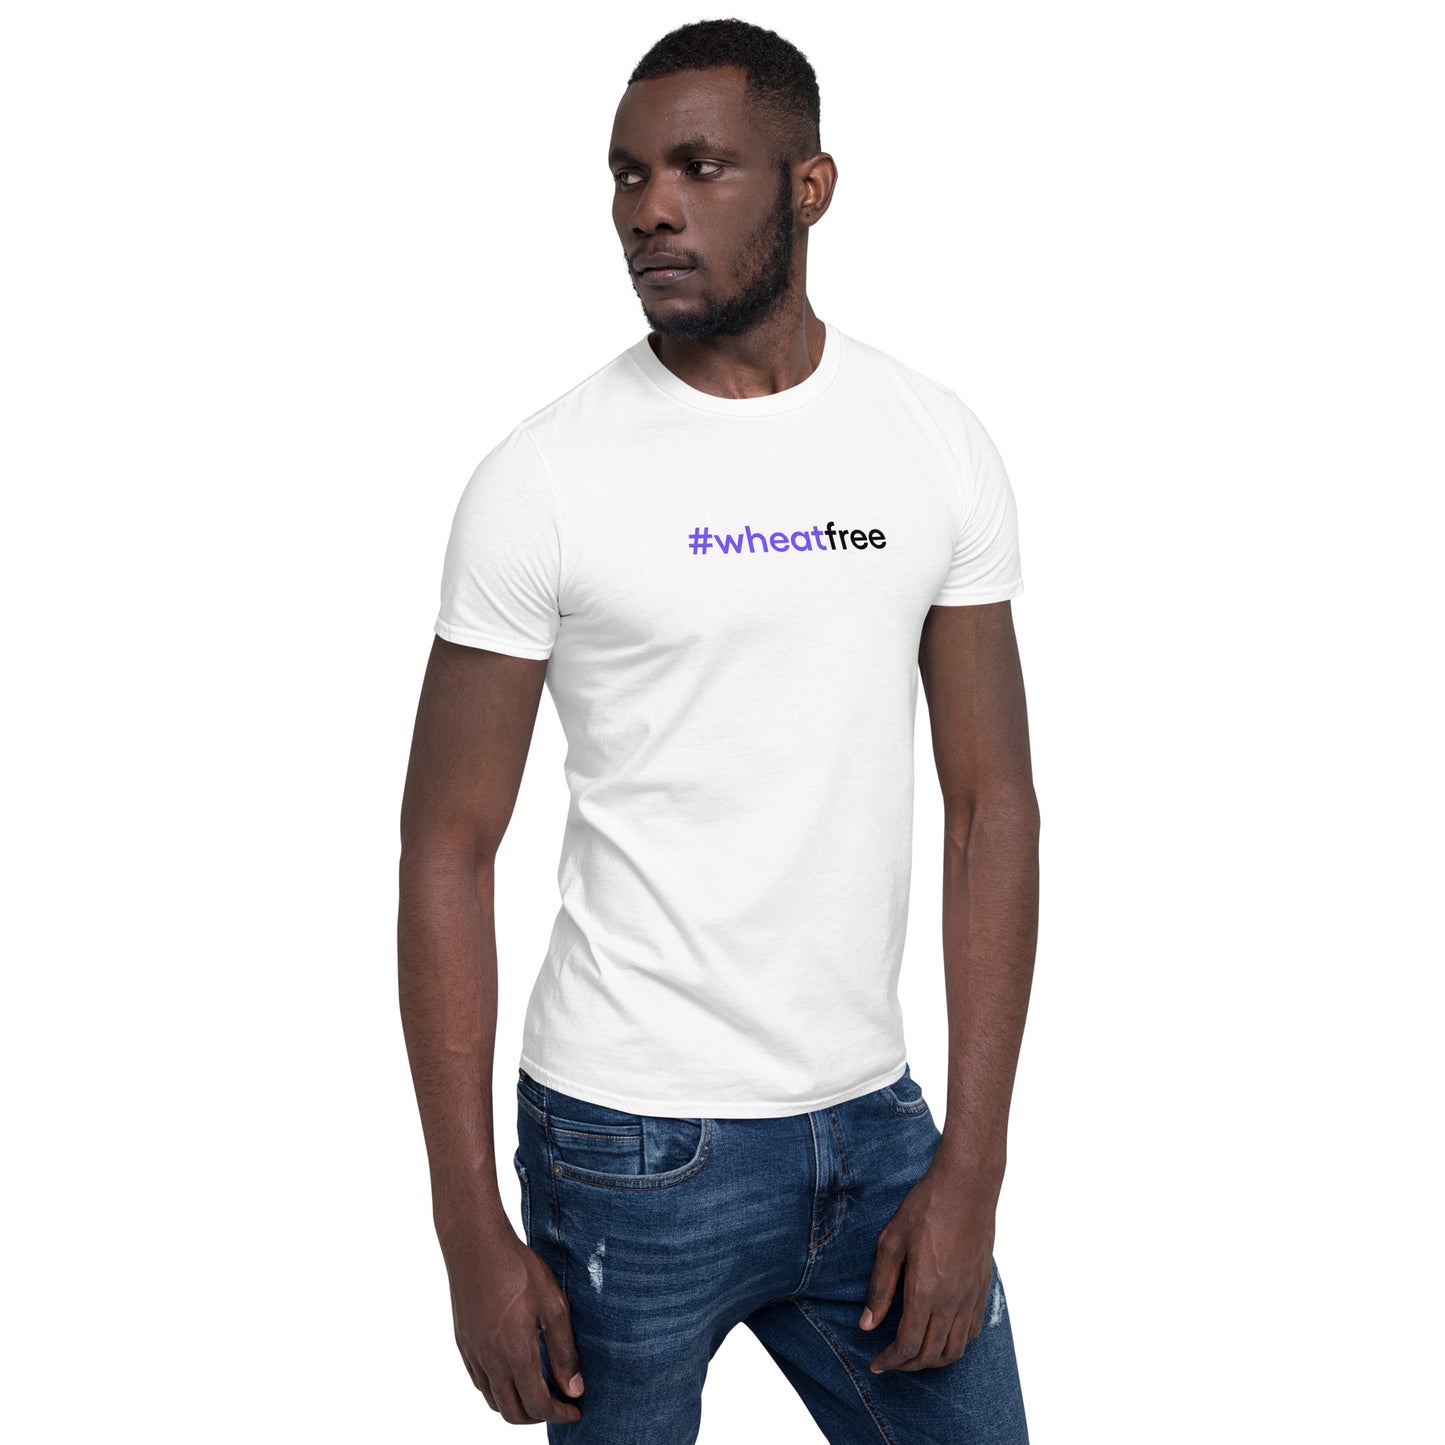 #wheatfree | Short-Sleeve Unisex T-Shirt